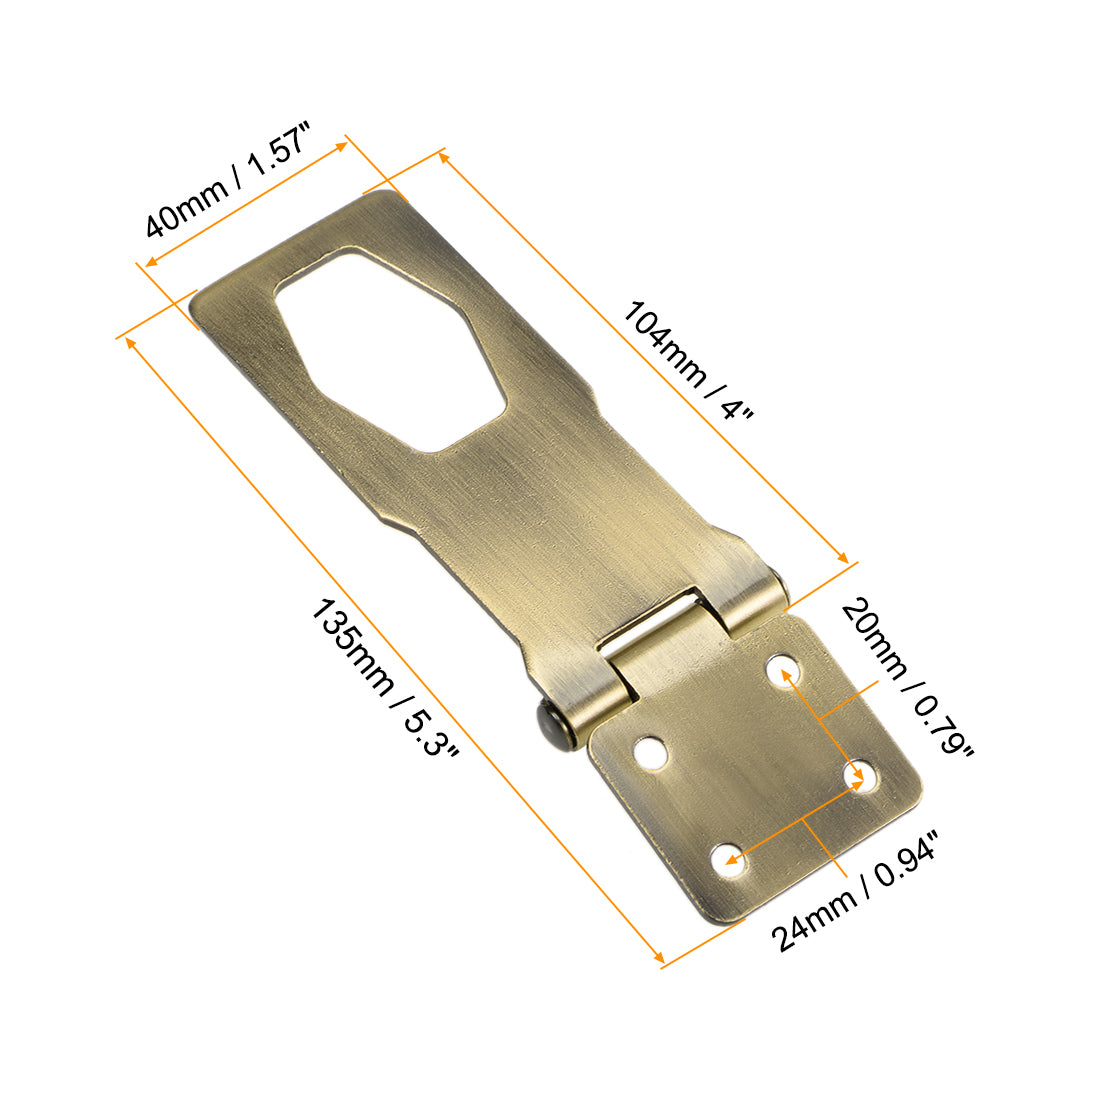 uxcell Uxcell 4-inch Keyed Hasp Locks W Screws for Door Keyed Alike Bronze Tone 2Pcs